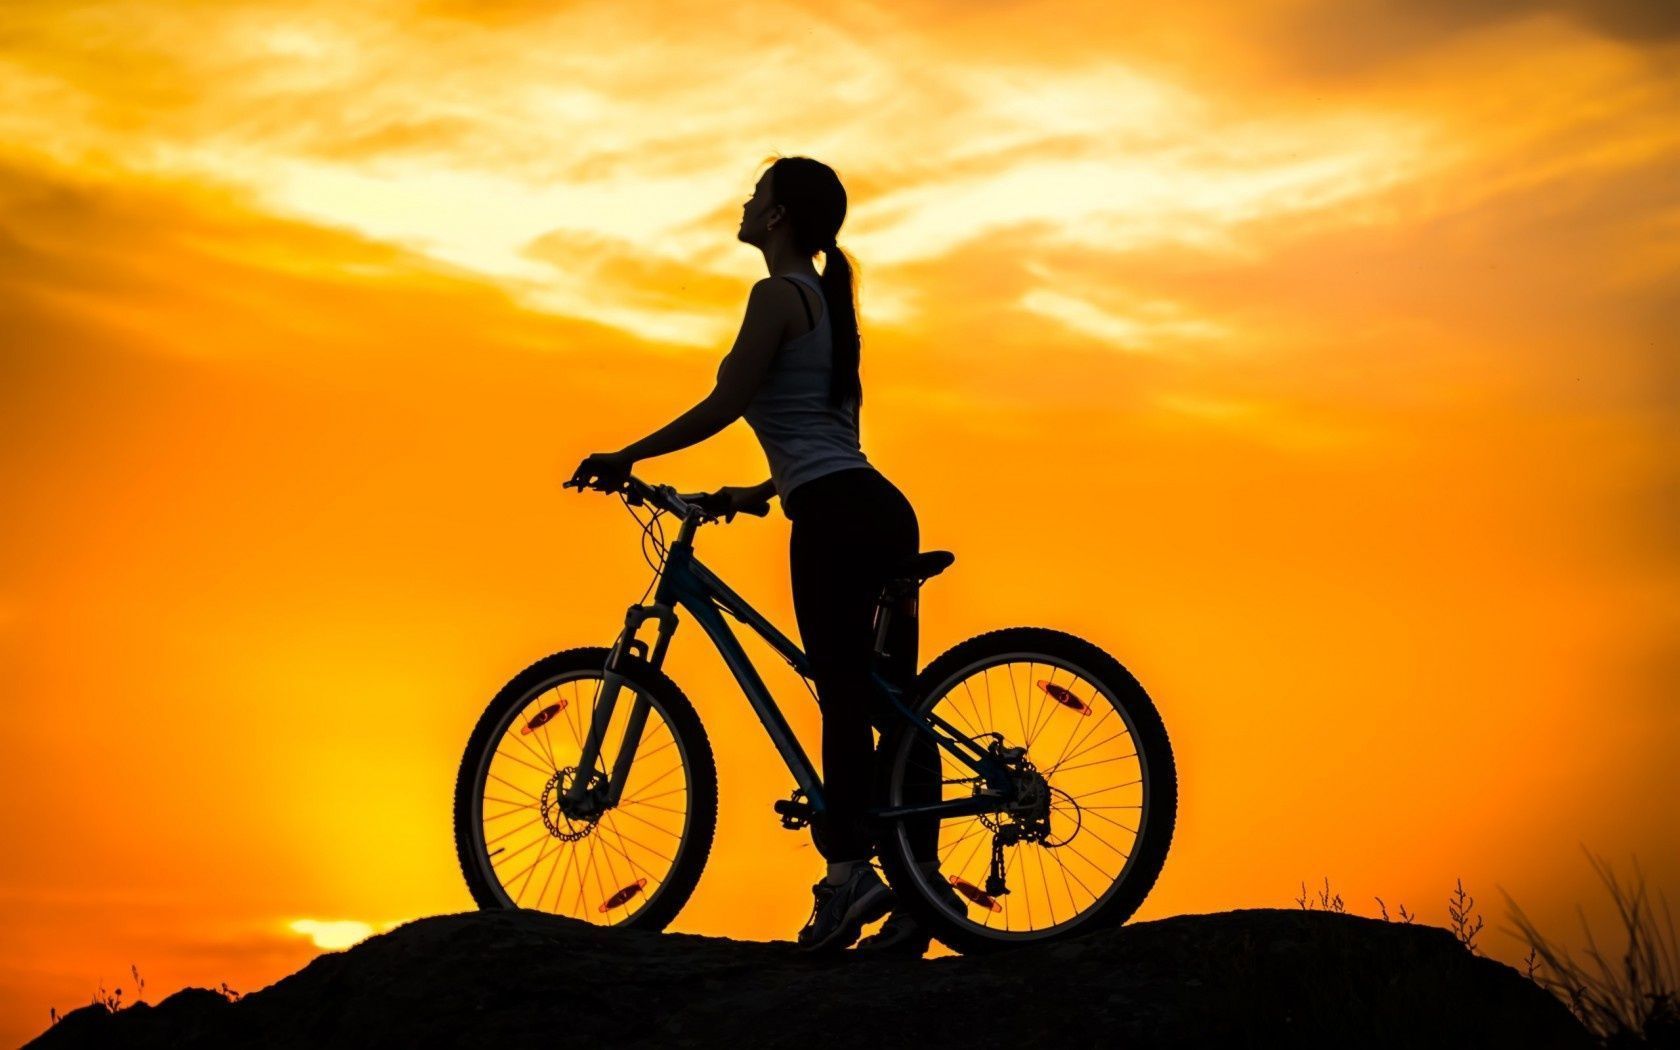 Cycling Desktop Wallpaper. Cycling Image. Cool Wallpaper. Bike silhouette, Bicycle, Bike ride